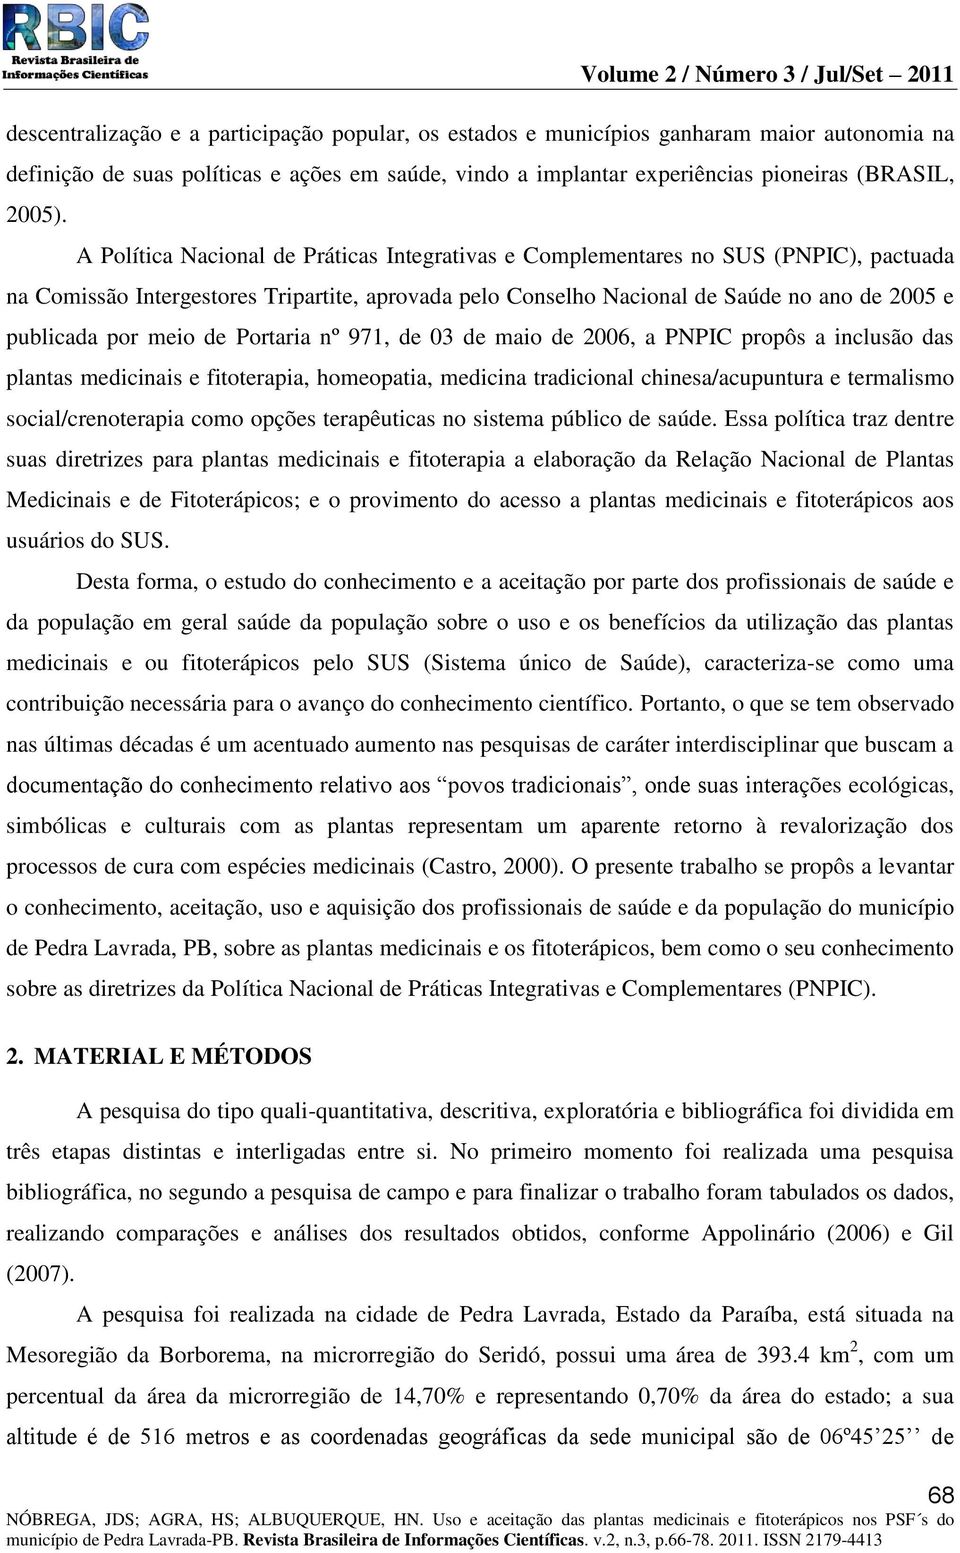 meio de Portaria nº 971, de 03 de maio de 2006, a PNPIC propôs a inclusão das plantas medicinais e fitoterapia, homeopatia, medicina tradicional chinesa/acupuntura e termalismo social/crenoterapia